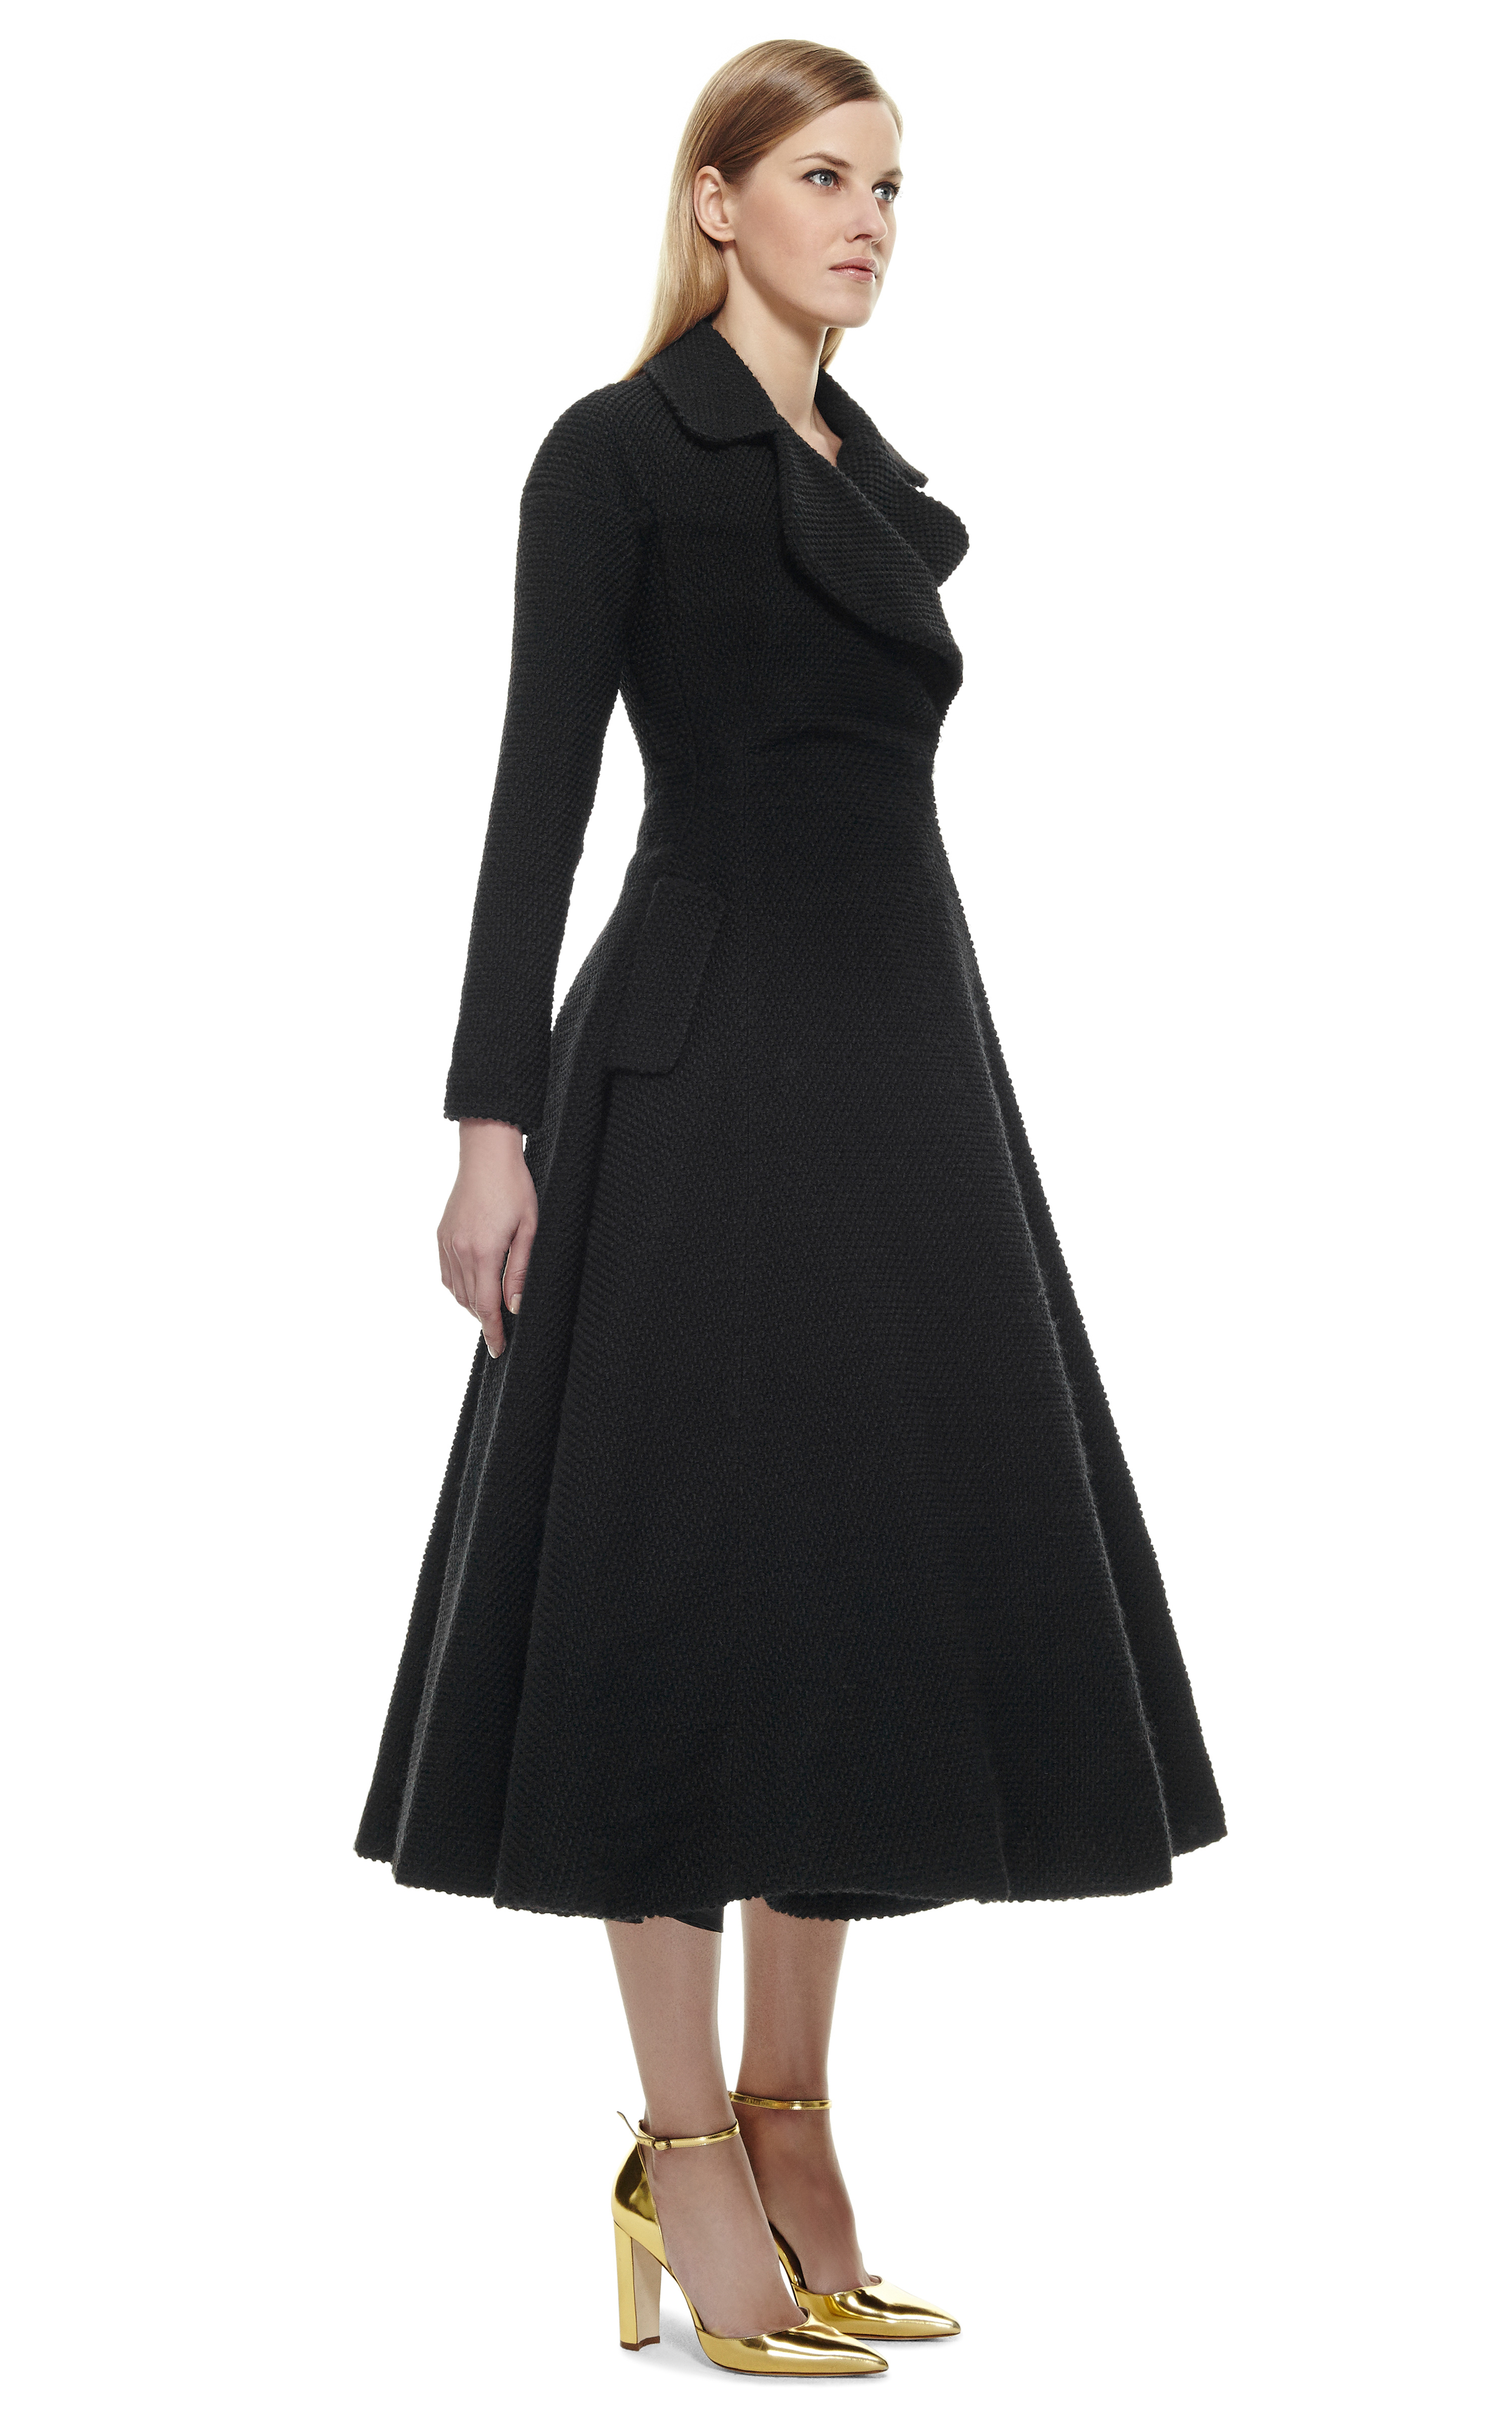 Lyst - Emilia Wickstead C Coat Dress with Tuille Fusing in Black